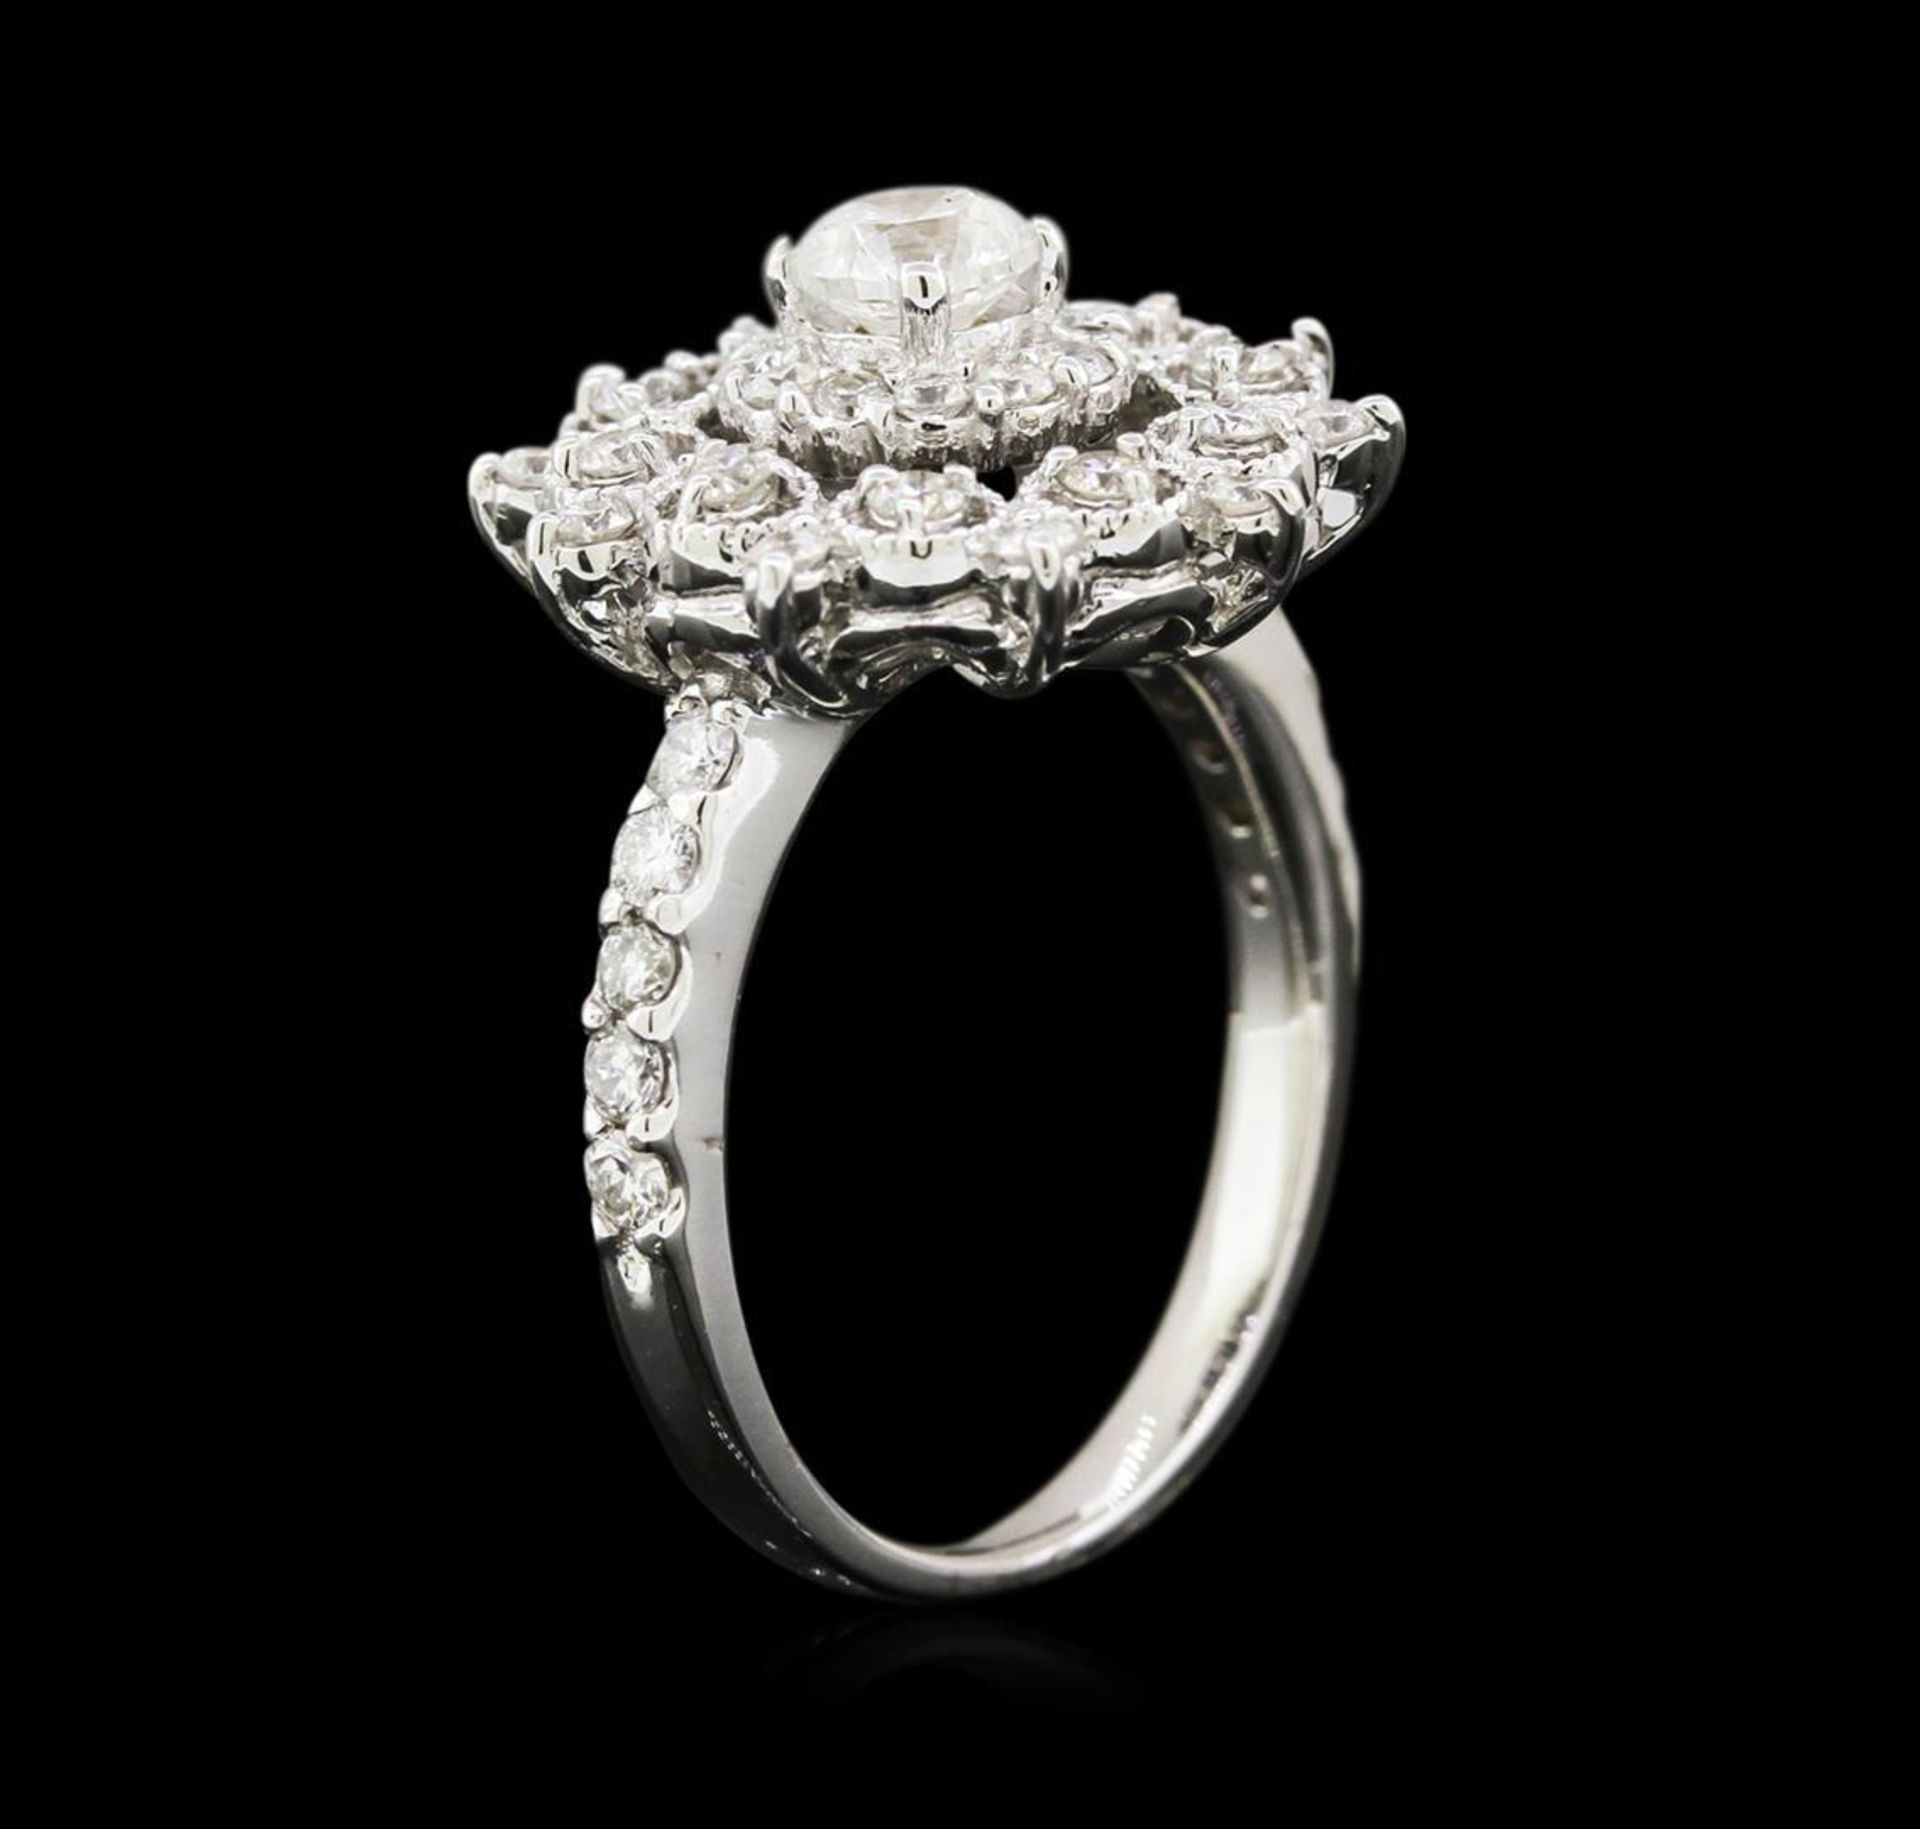 1.44 ctw Diamond Ring - 14KT White Gold - Image 3 of 4